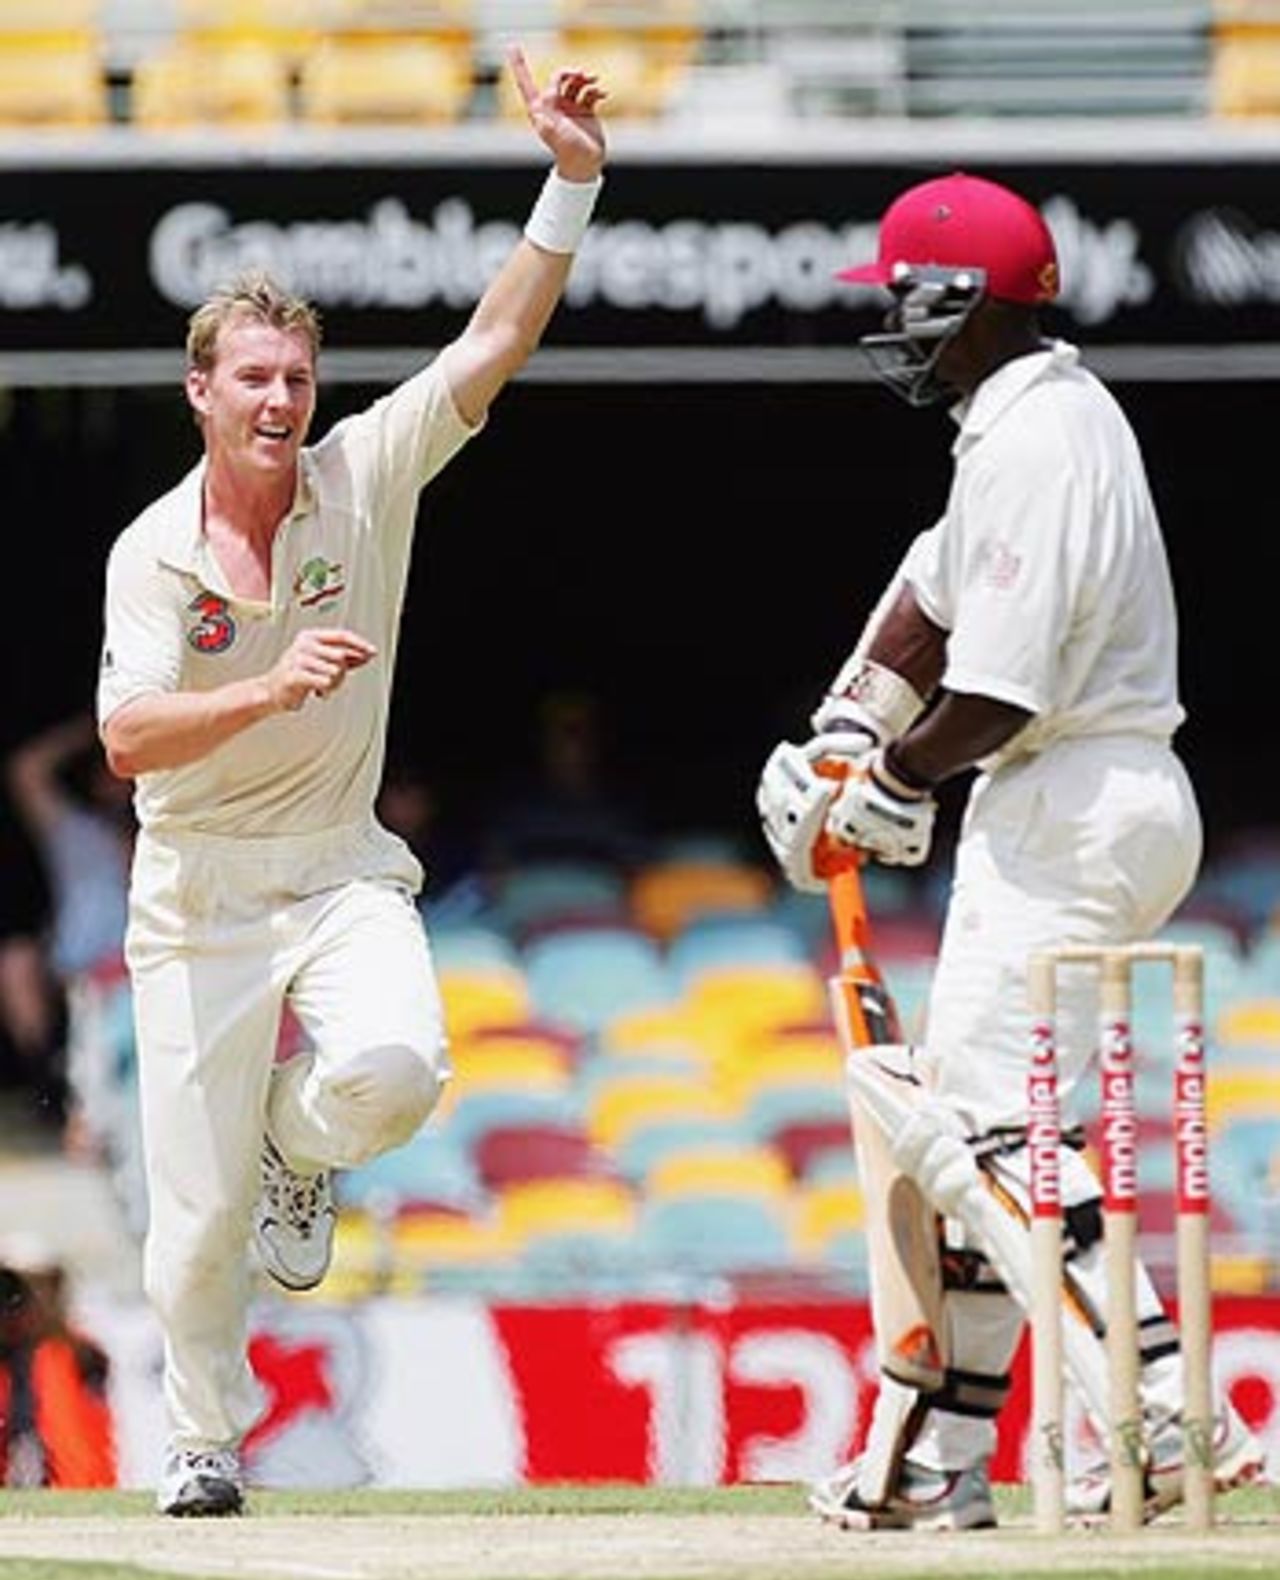 Brett Lee has Devon Smith caught by Shane Warne, 1st Test, Brisbane, 4th day, November 5, 2005